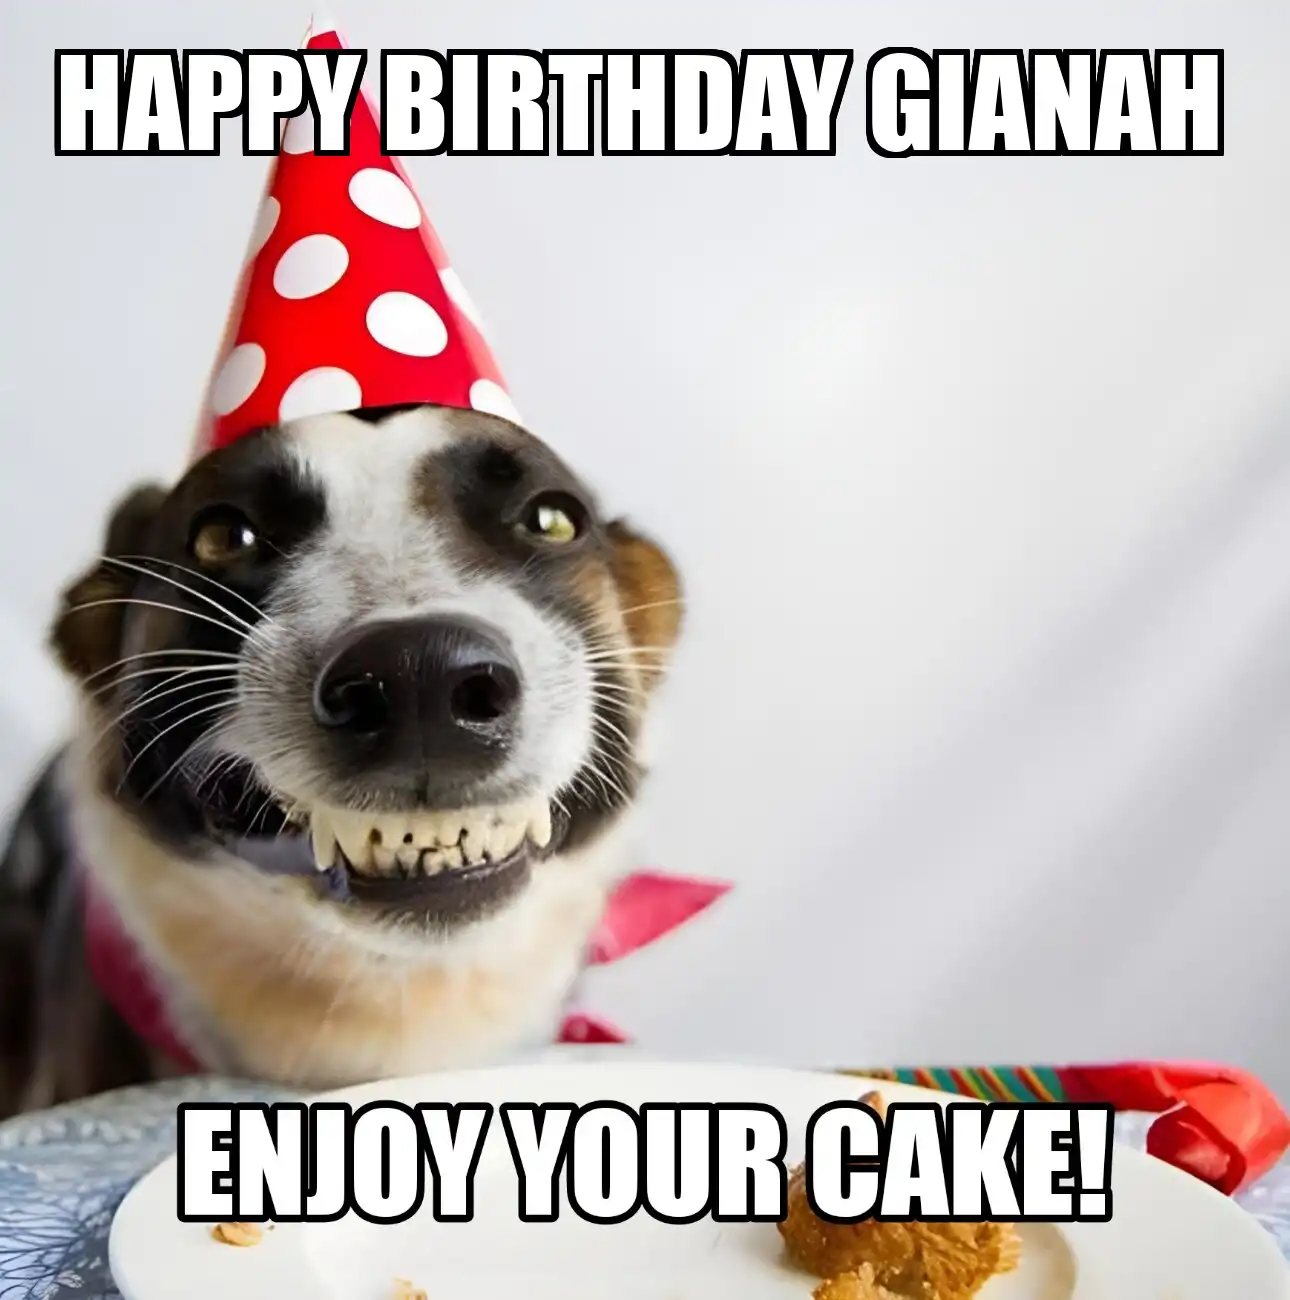 Happy Birthday Gianah Enjoy Your Cake Dog Meme